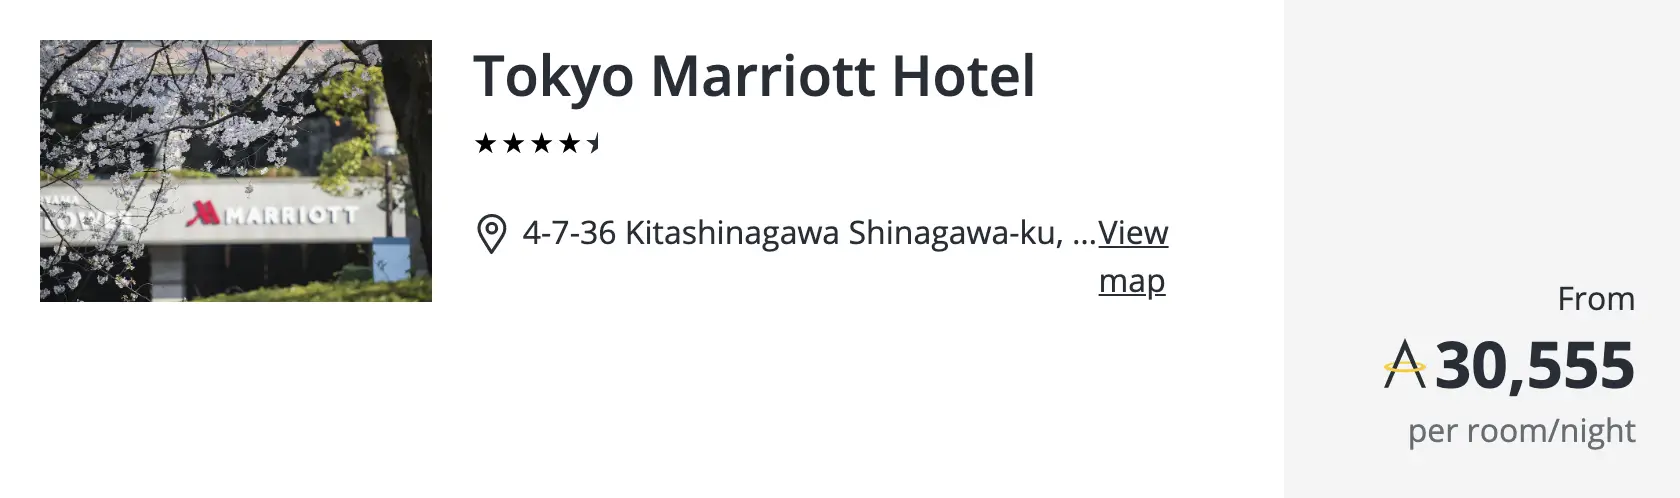 tokyo marriott hotel asia miles